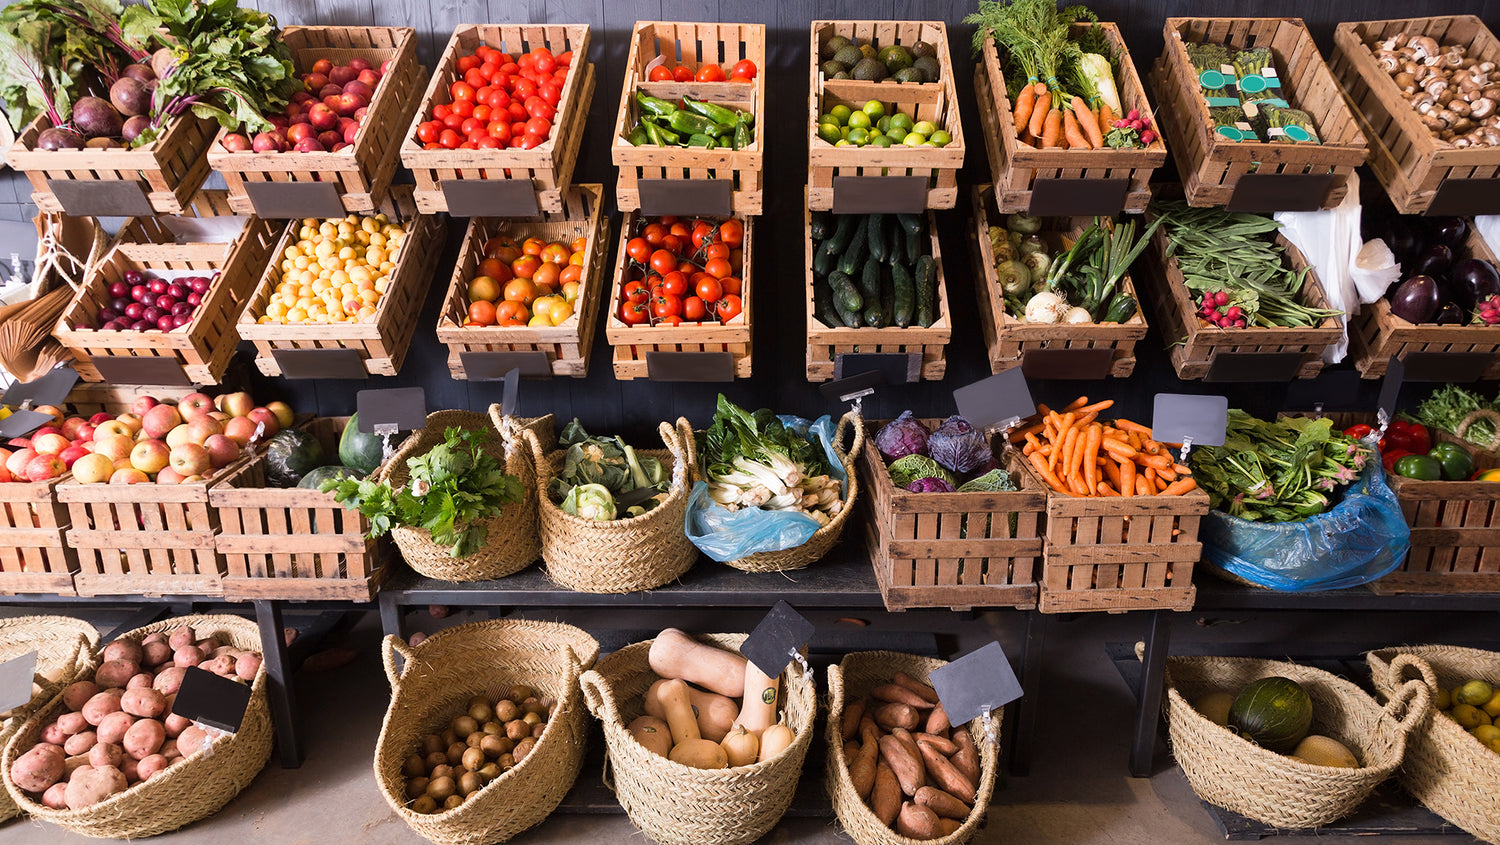 A Market Place For Vegetables